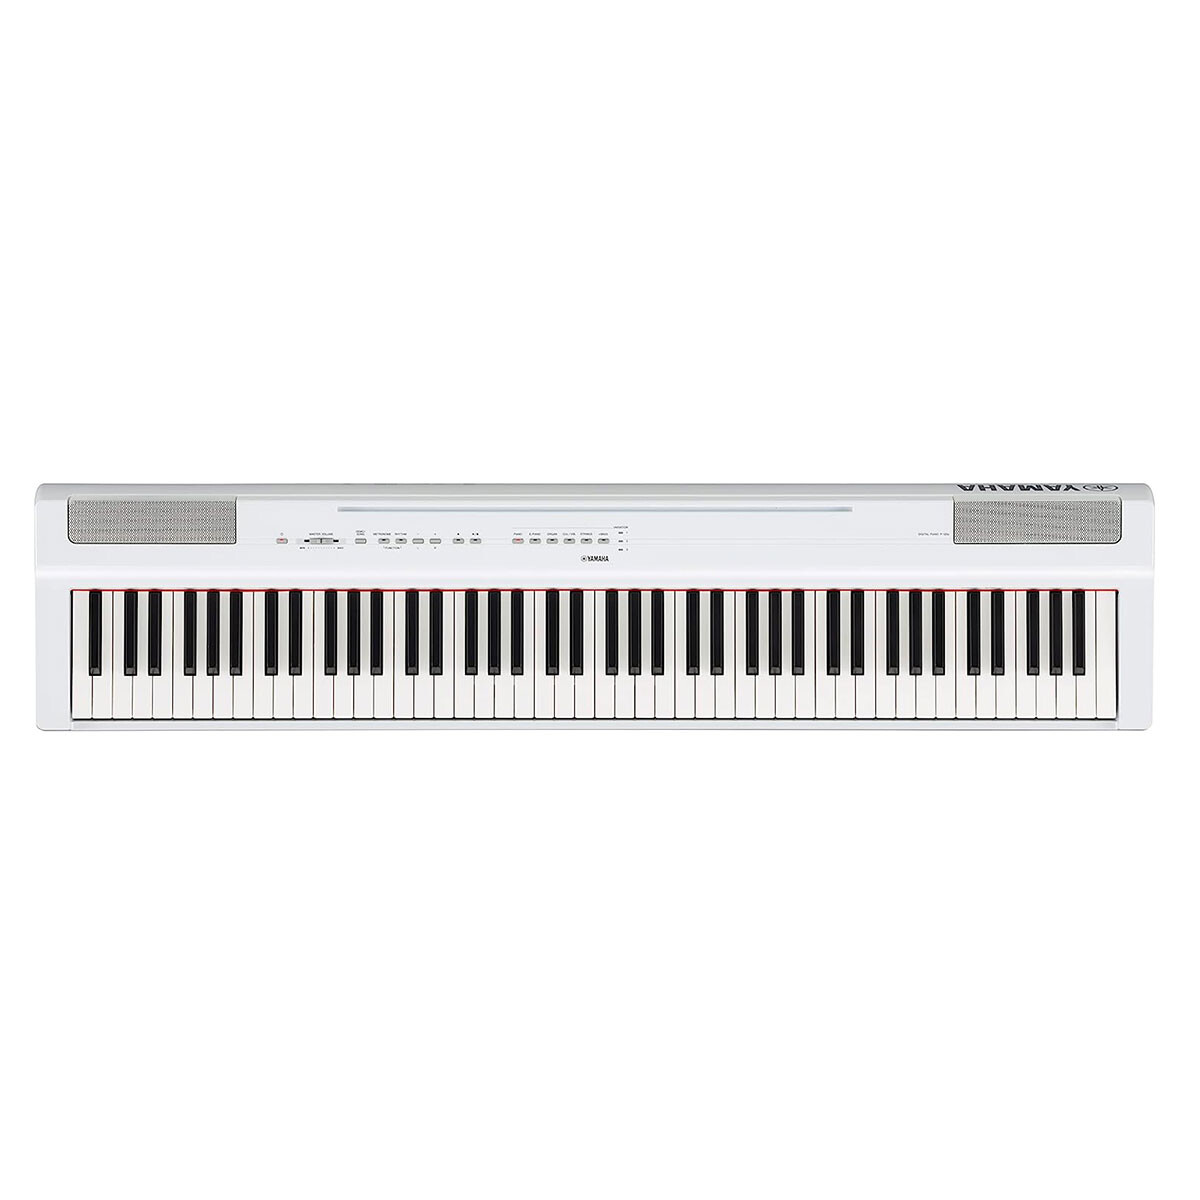 Piano Digital Yamaha P125a White 